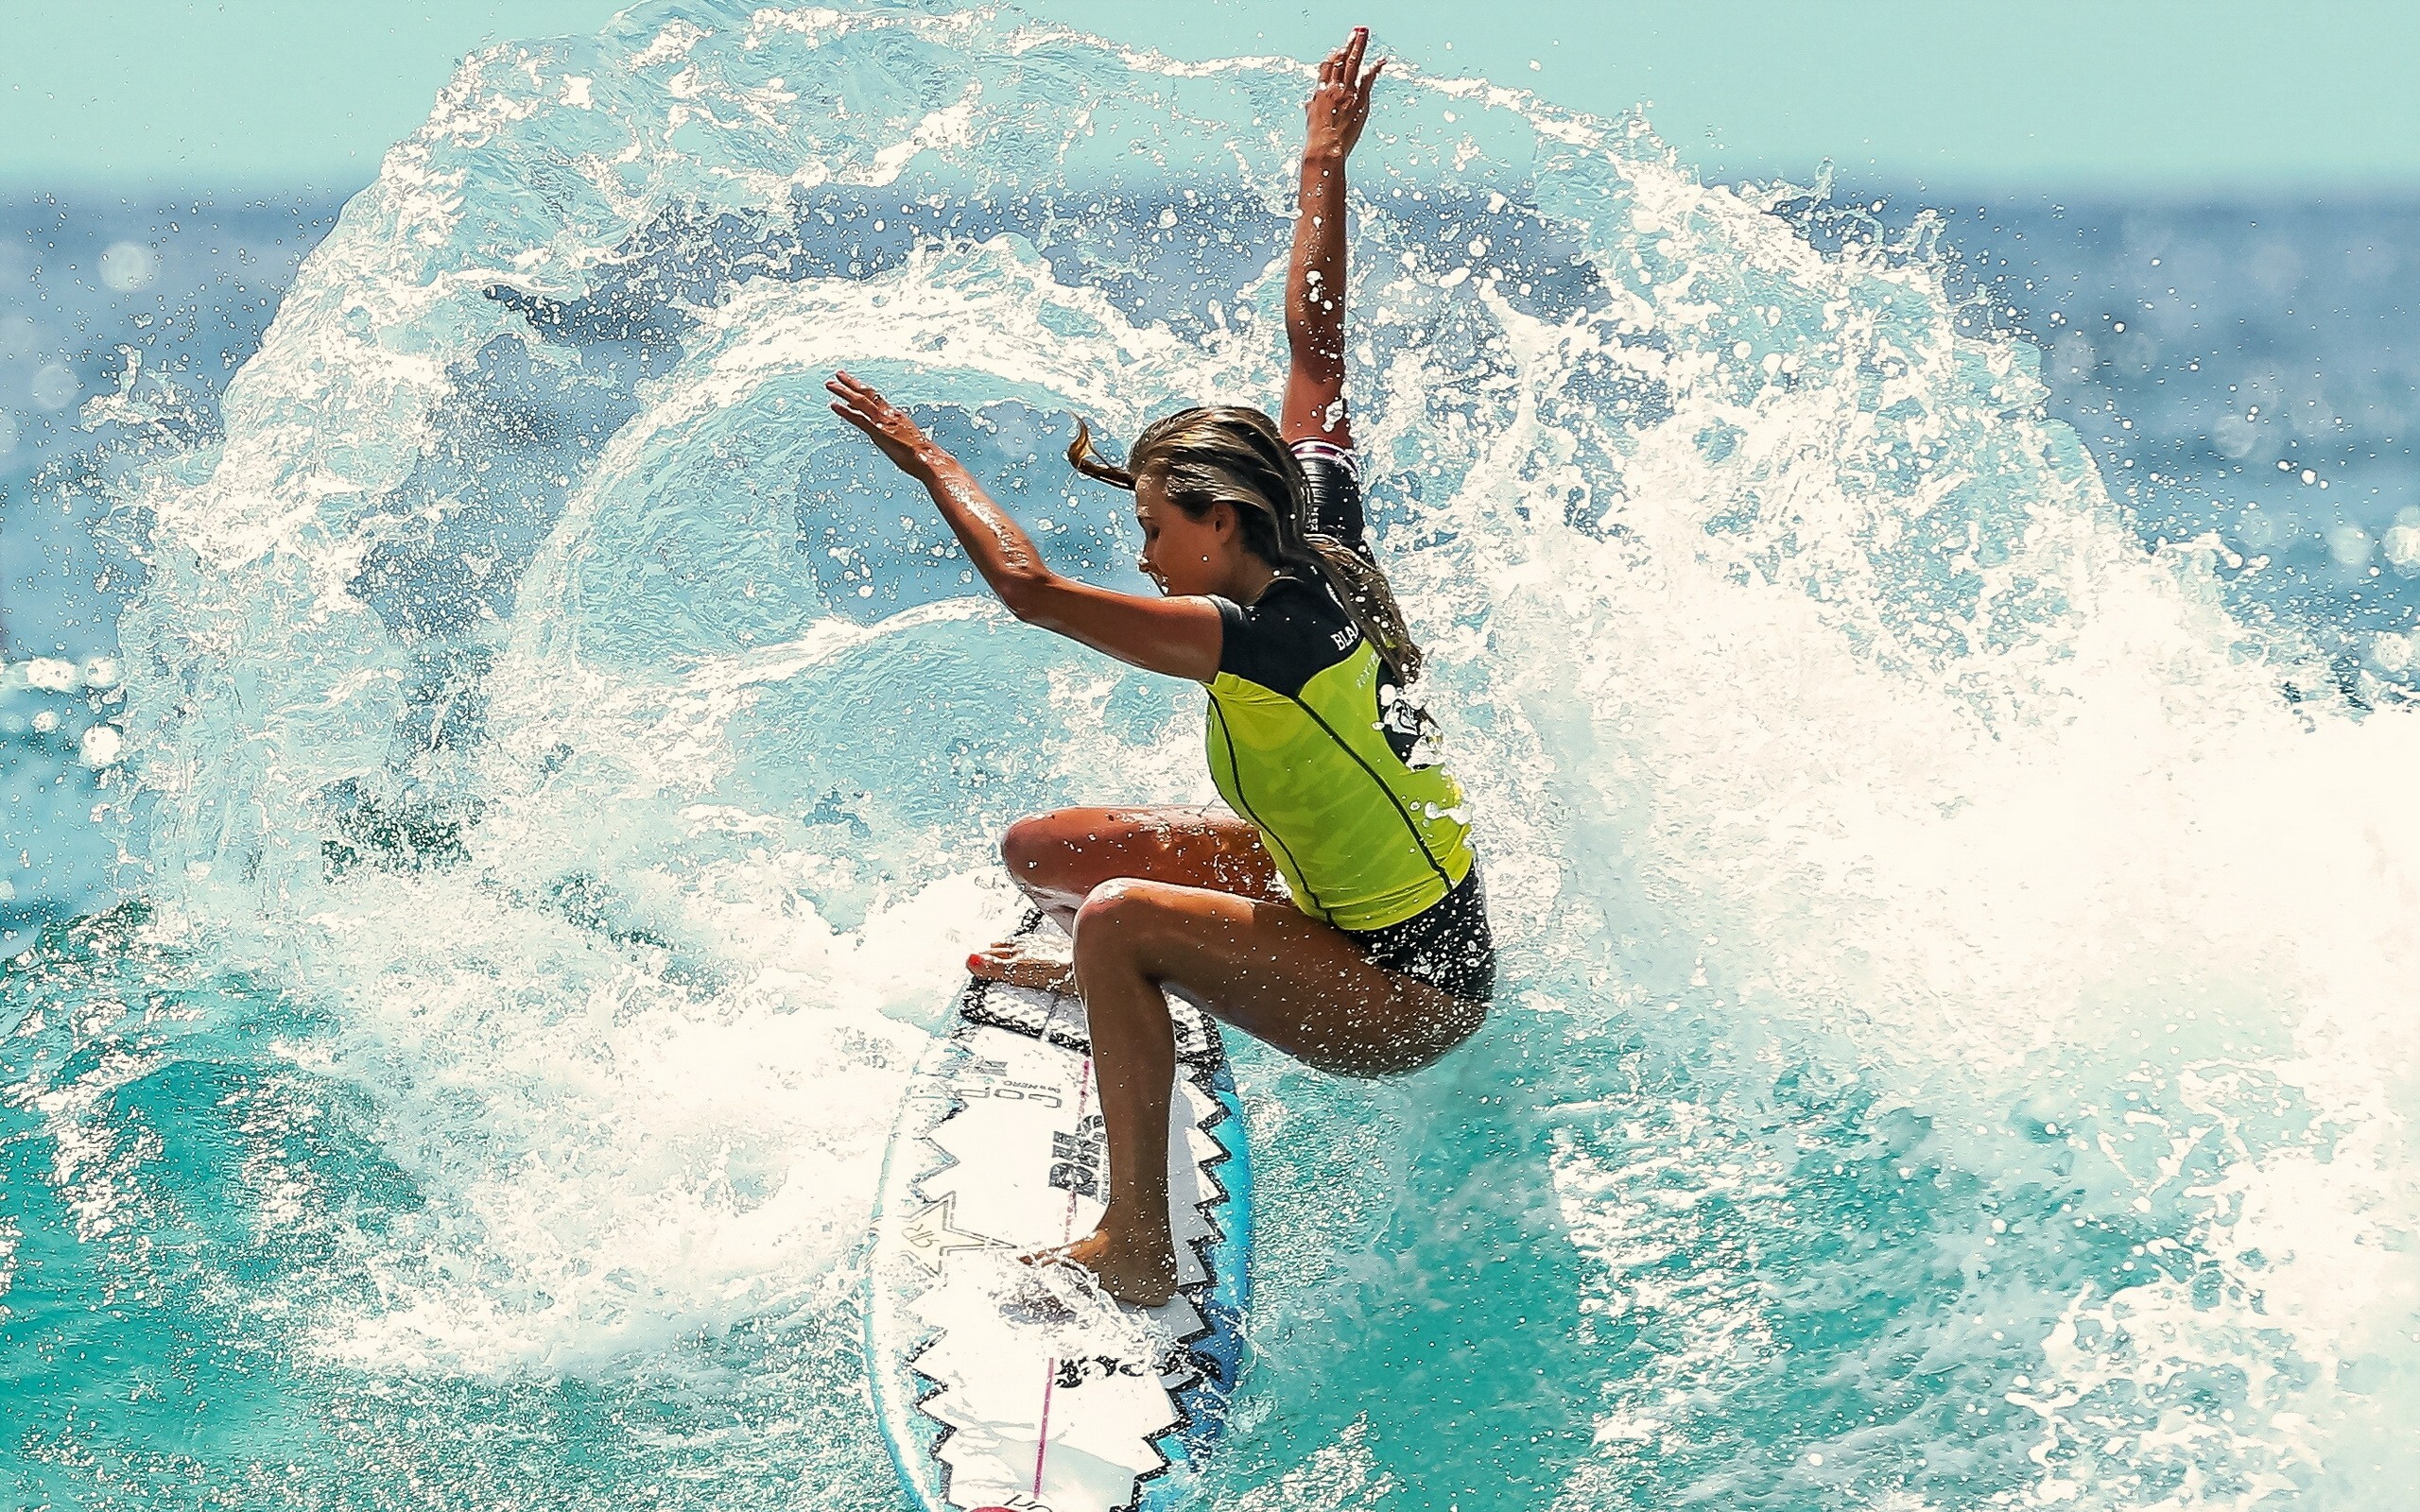 Girl Surfing: Alana Blanchard, The Hawaiian professional surfer and model, ASP World Tour. 2560x1600 HD Wallpaper.